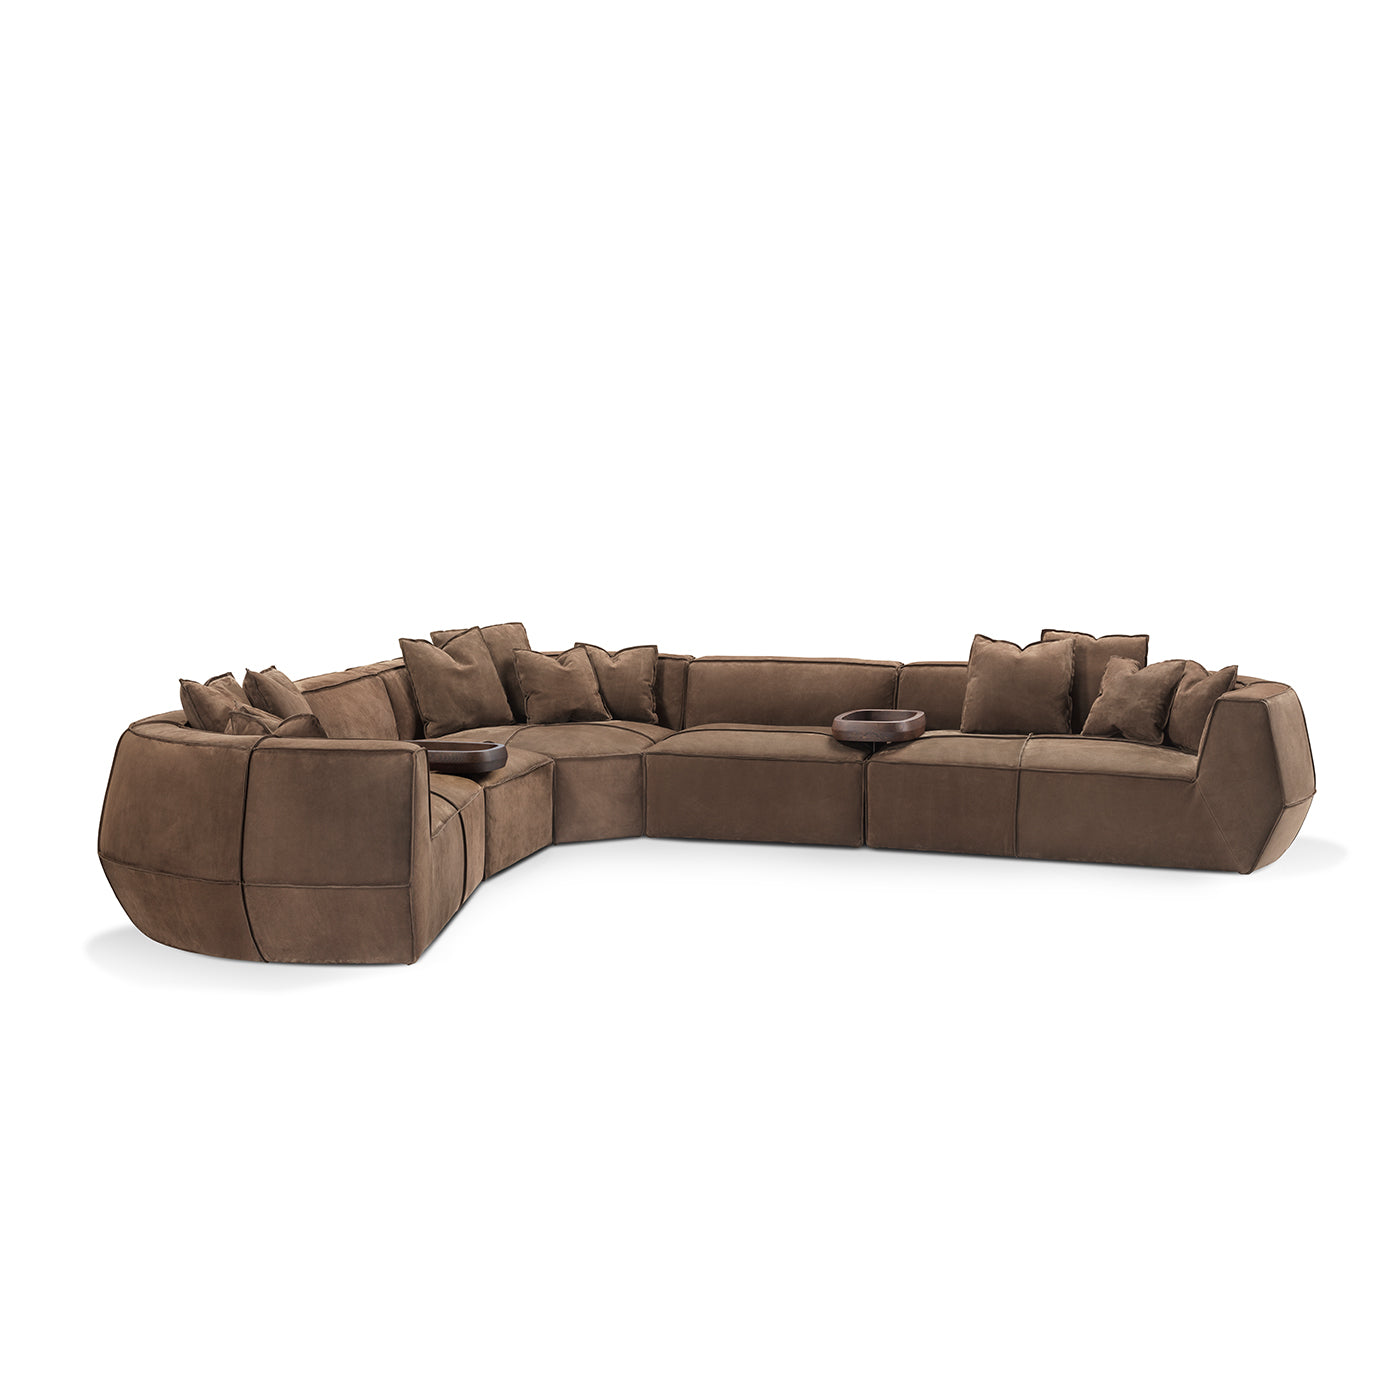 Infinito Brown Leather Sofa by Lorenza Bozzoli - Alternative view 1